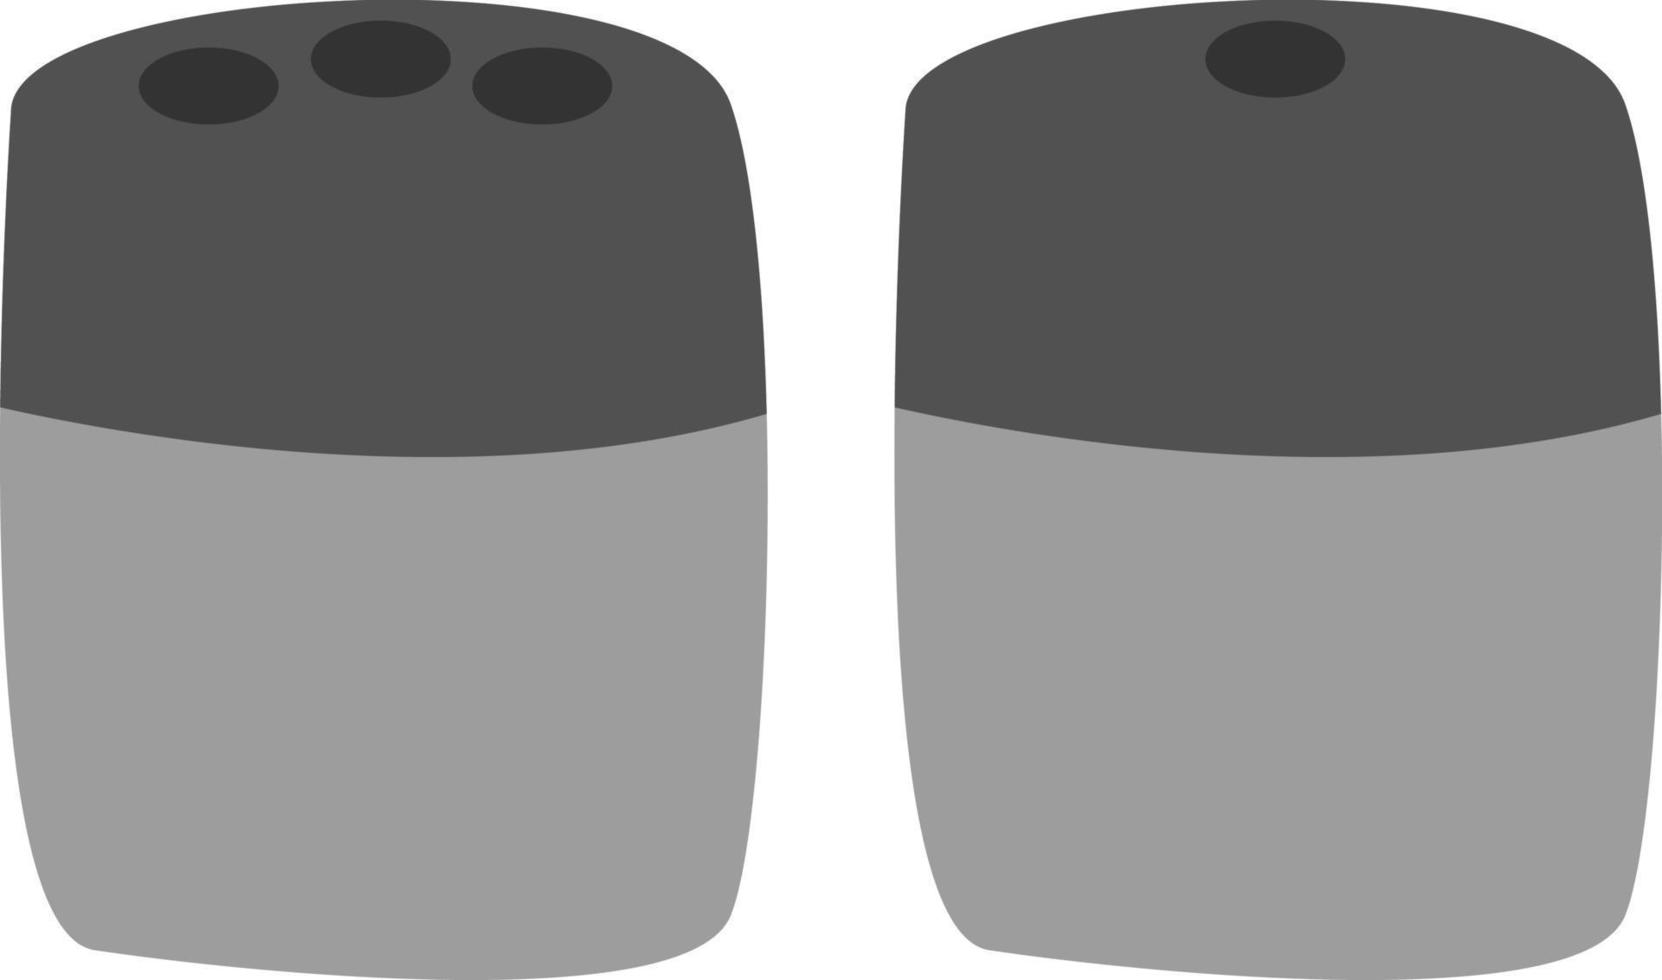 Salt and pepper shaker, illustration, vector, on a white background. vector